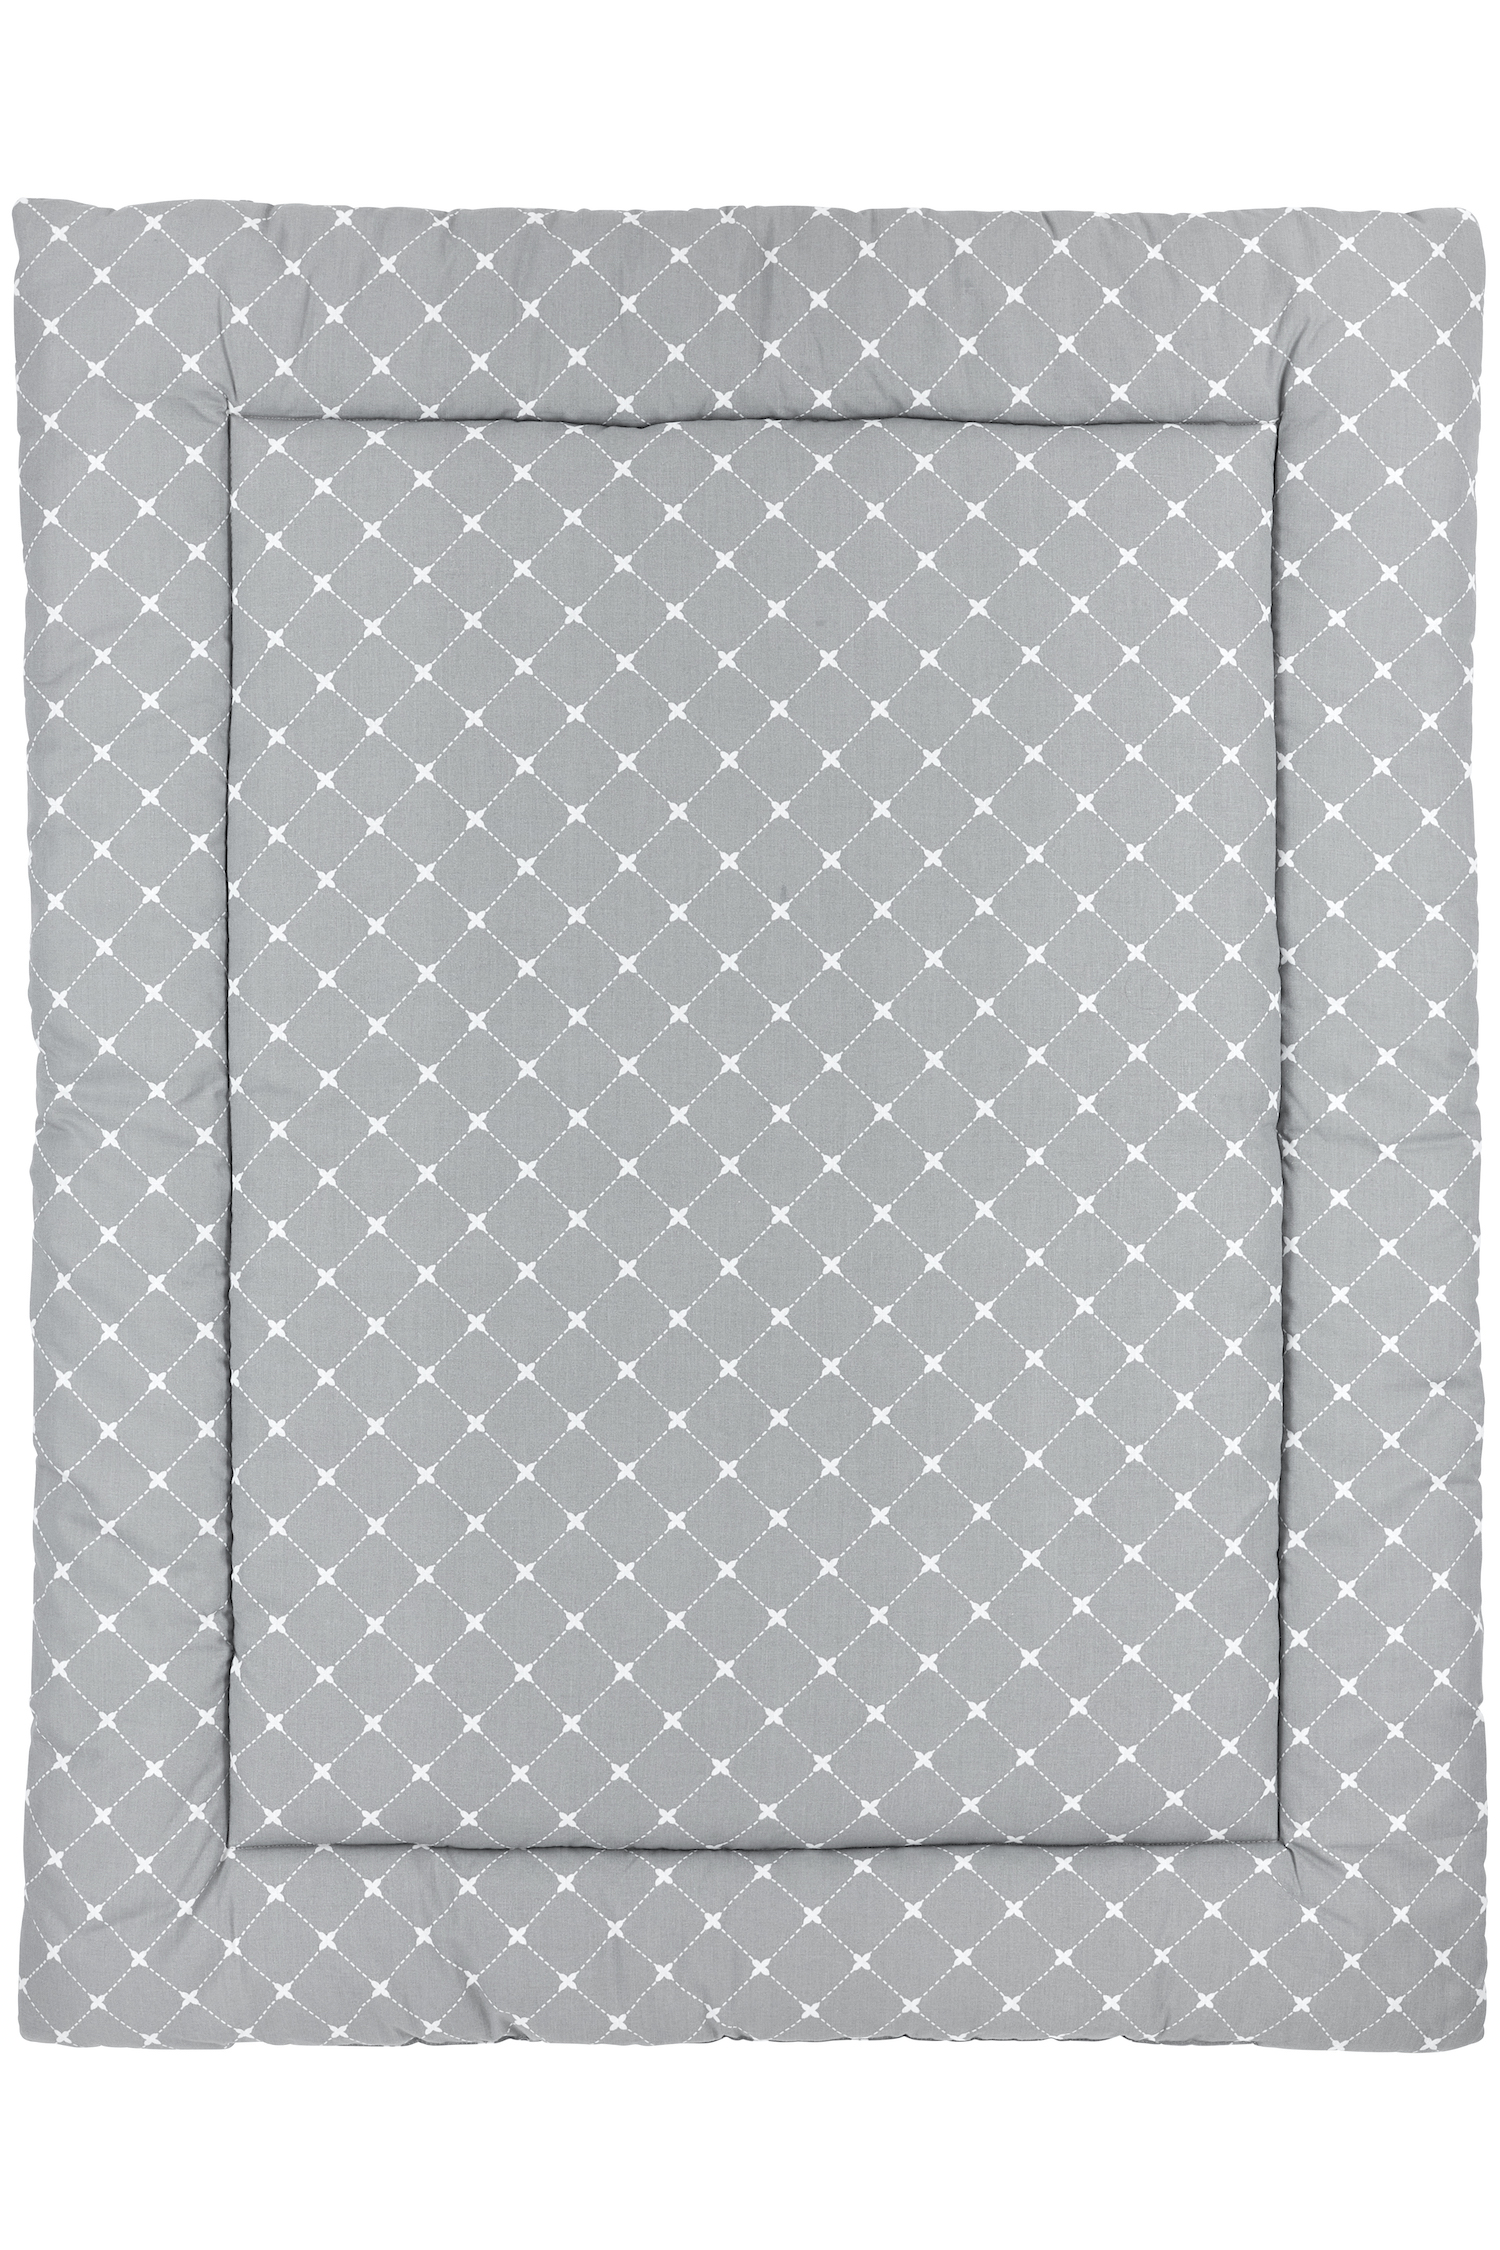 Playpen mattress Louis - grey - 80x100cm